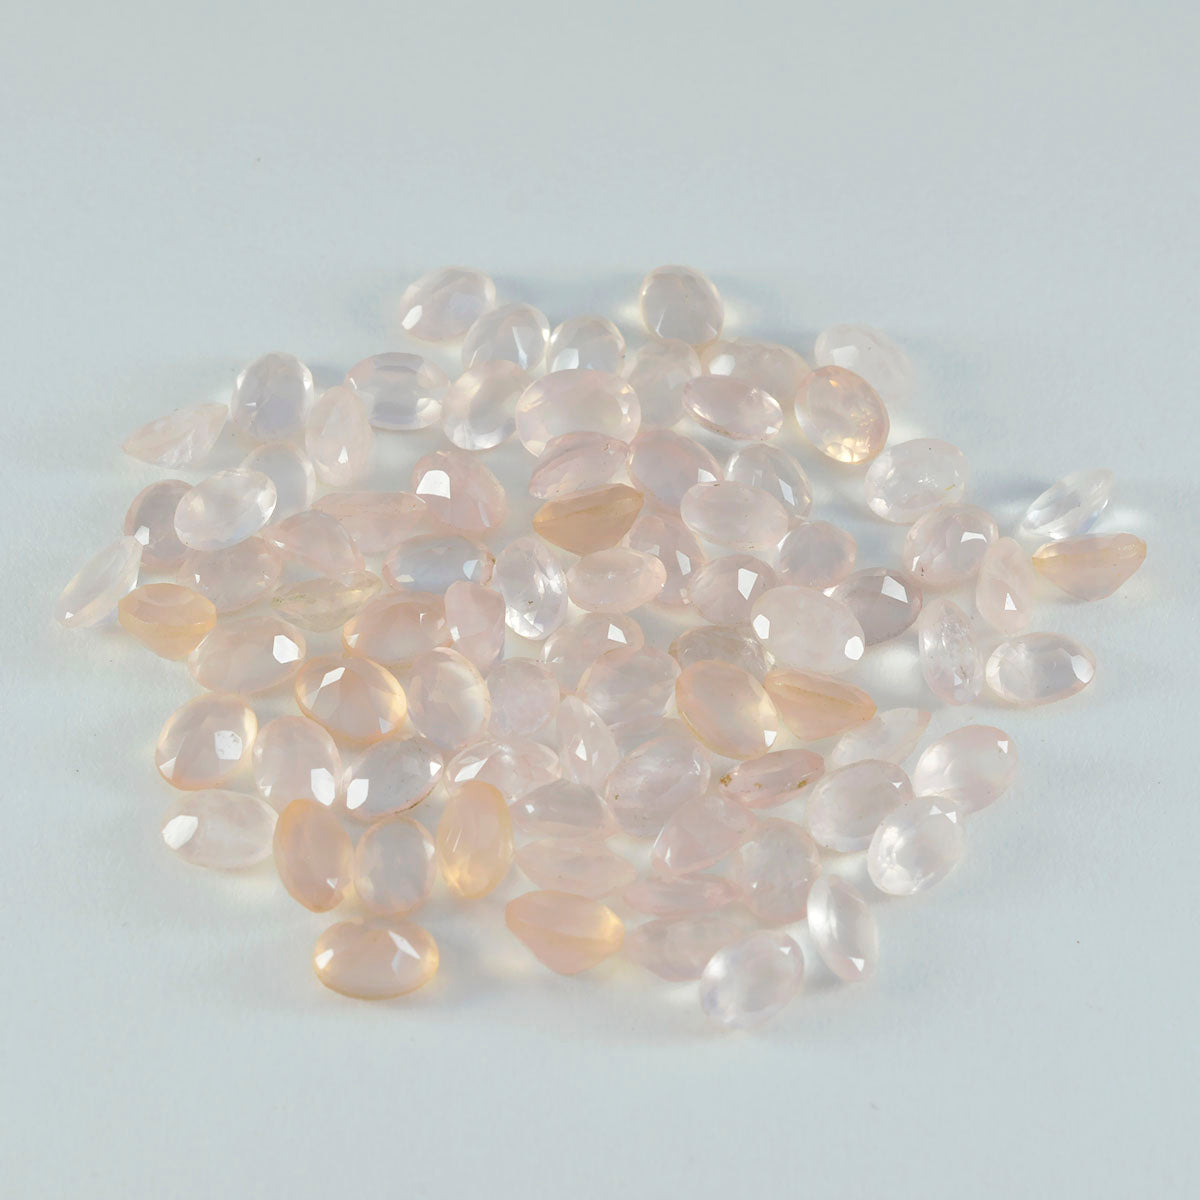 Riyogems 1PC roze rozenkwarts gefacetteerd 3x5 mm ovale vorm mooie kwaliteit losse steen